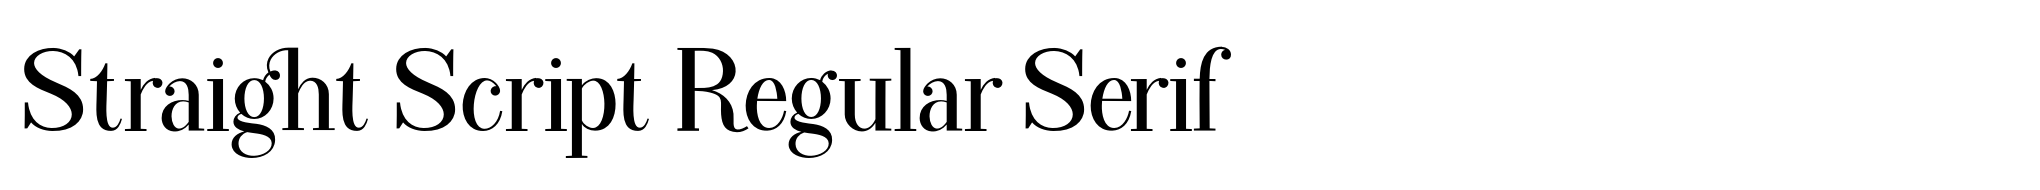 Straight Script Regular Serif image